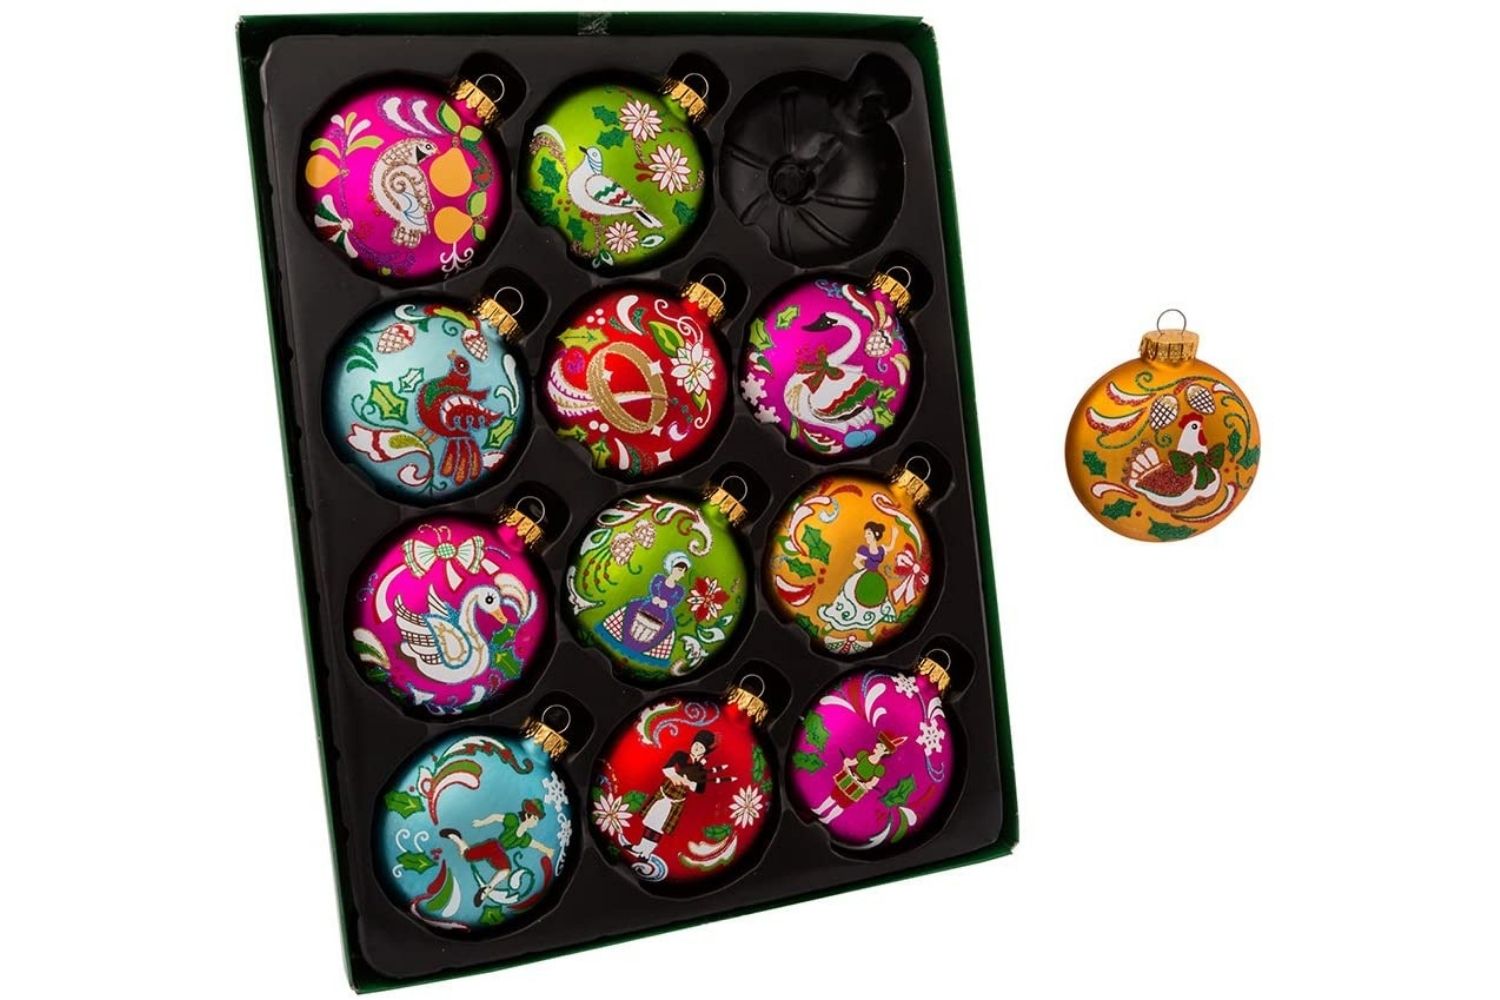 The Best Christmas Ornaments Option: Kurt Adler 65MM 12 Days of Christmas Glass Ornament Set